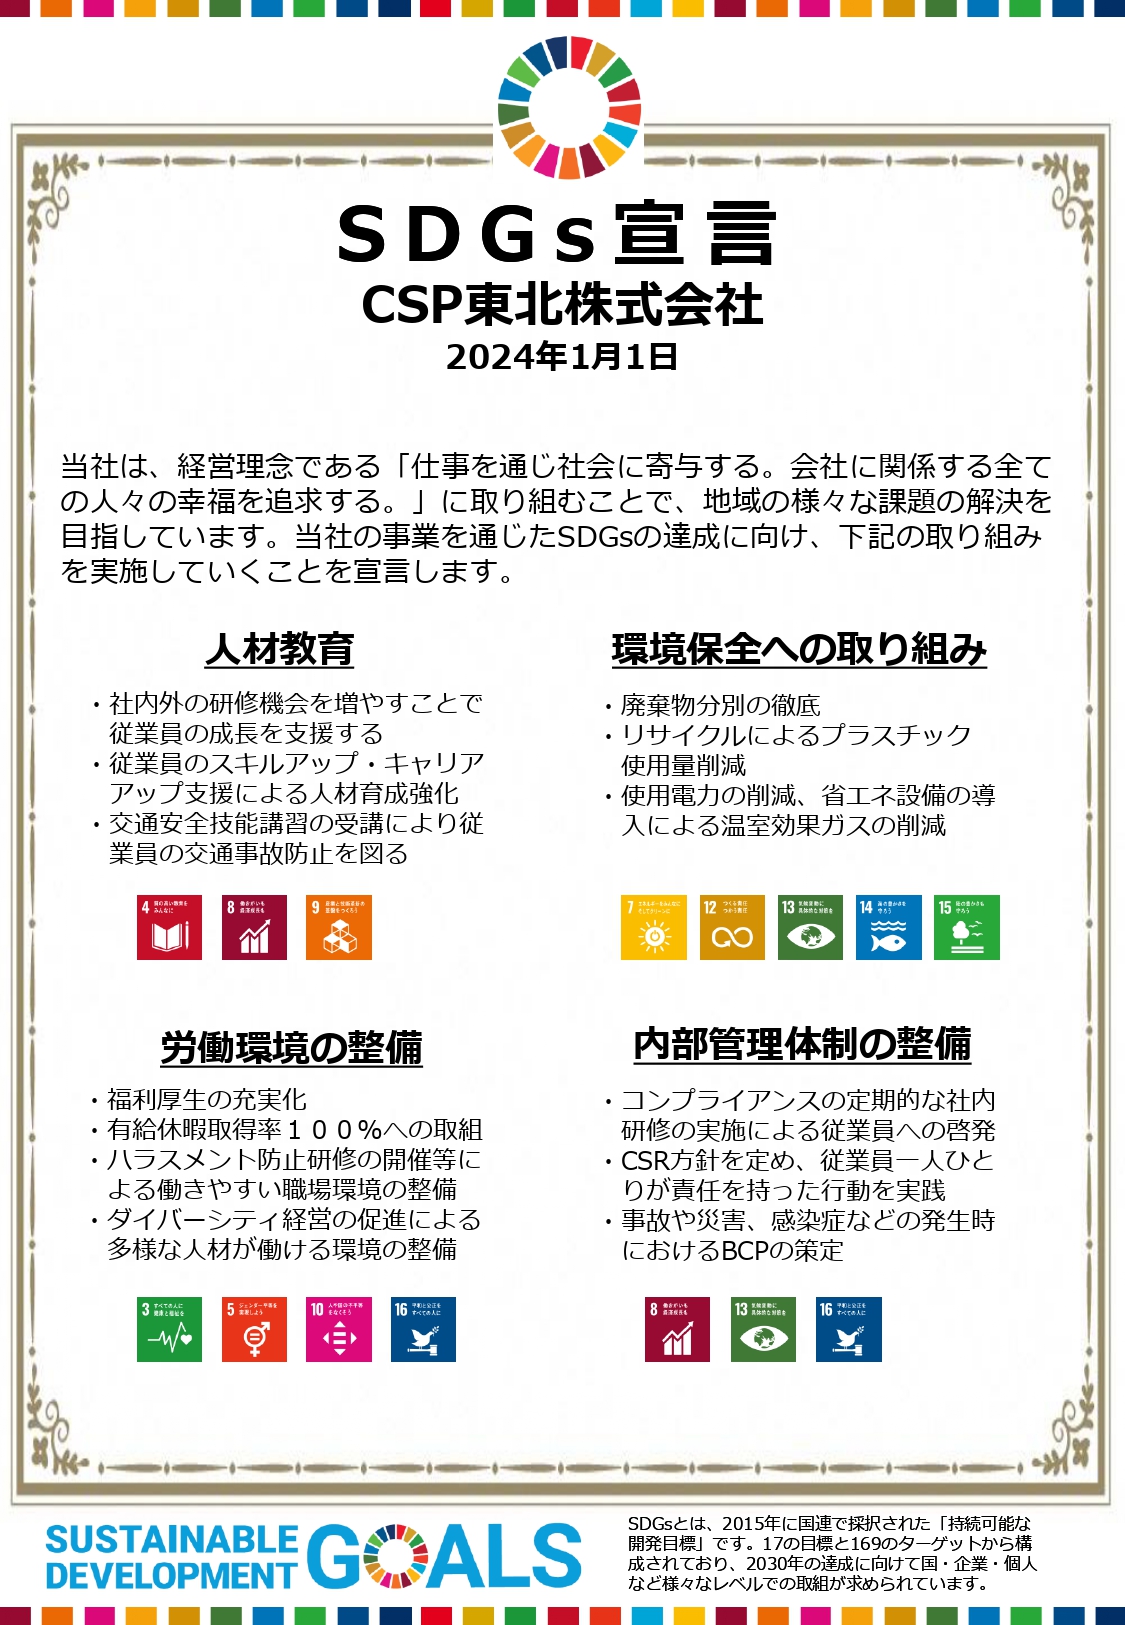 CSP東北株式会社のSDGs宣言書